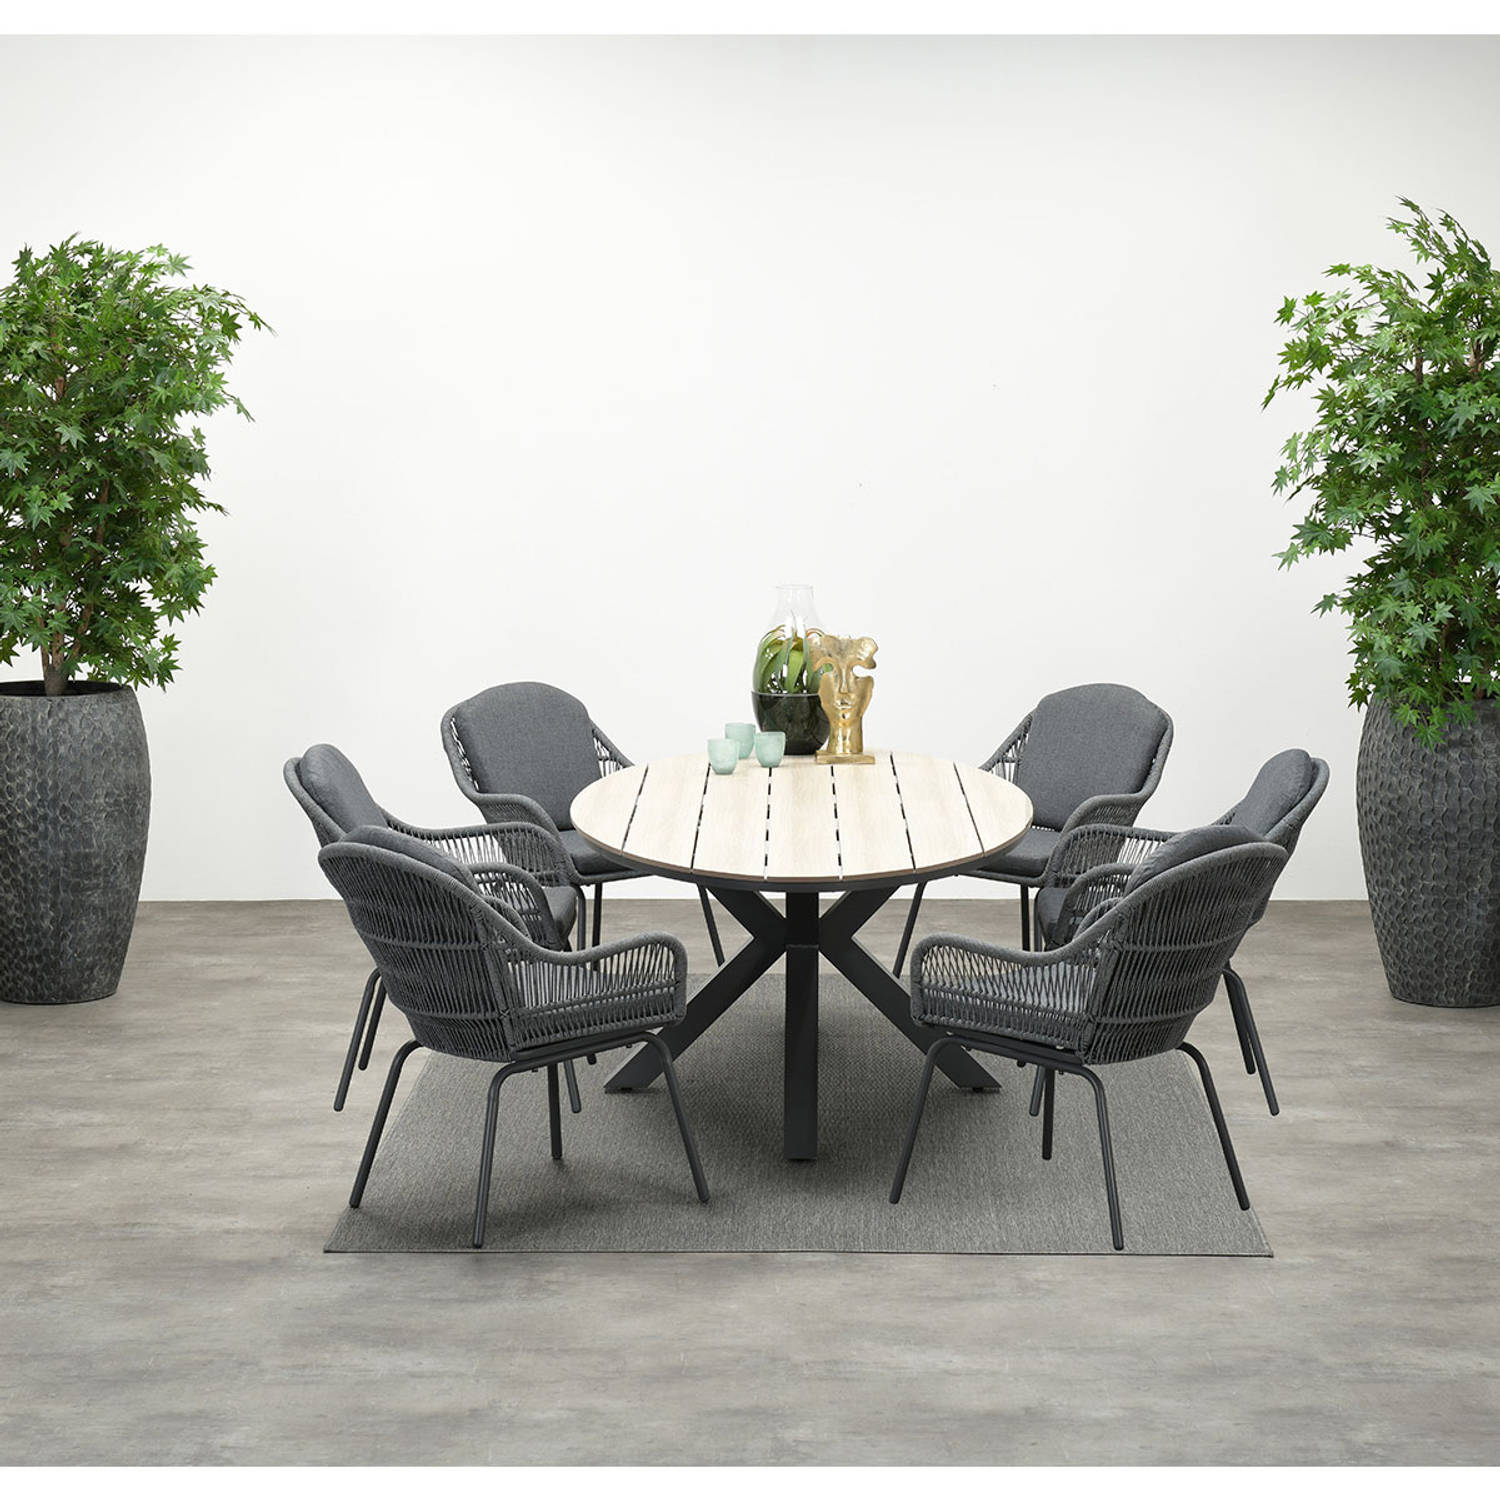 Fractie Zakje voorspelling Garden Impressions Tulli tuintafel 200x115 cm - donker grijs | Blokker